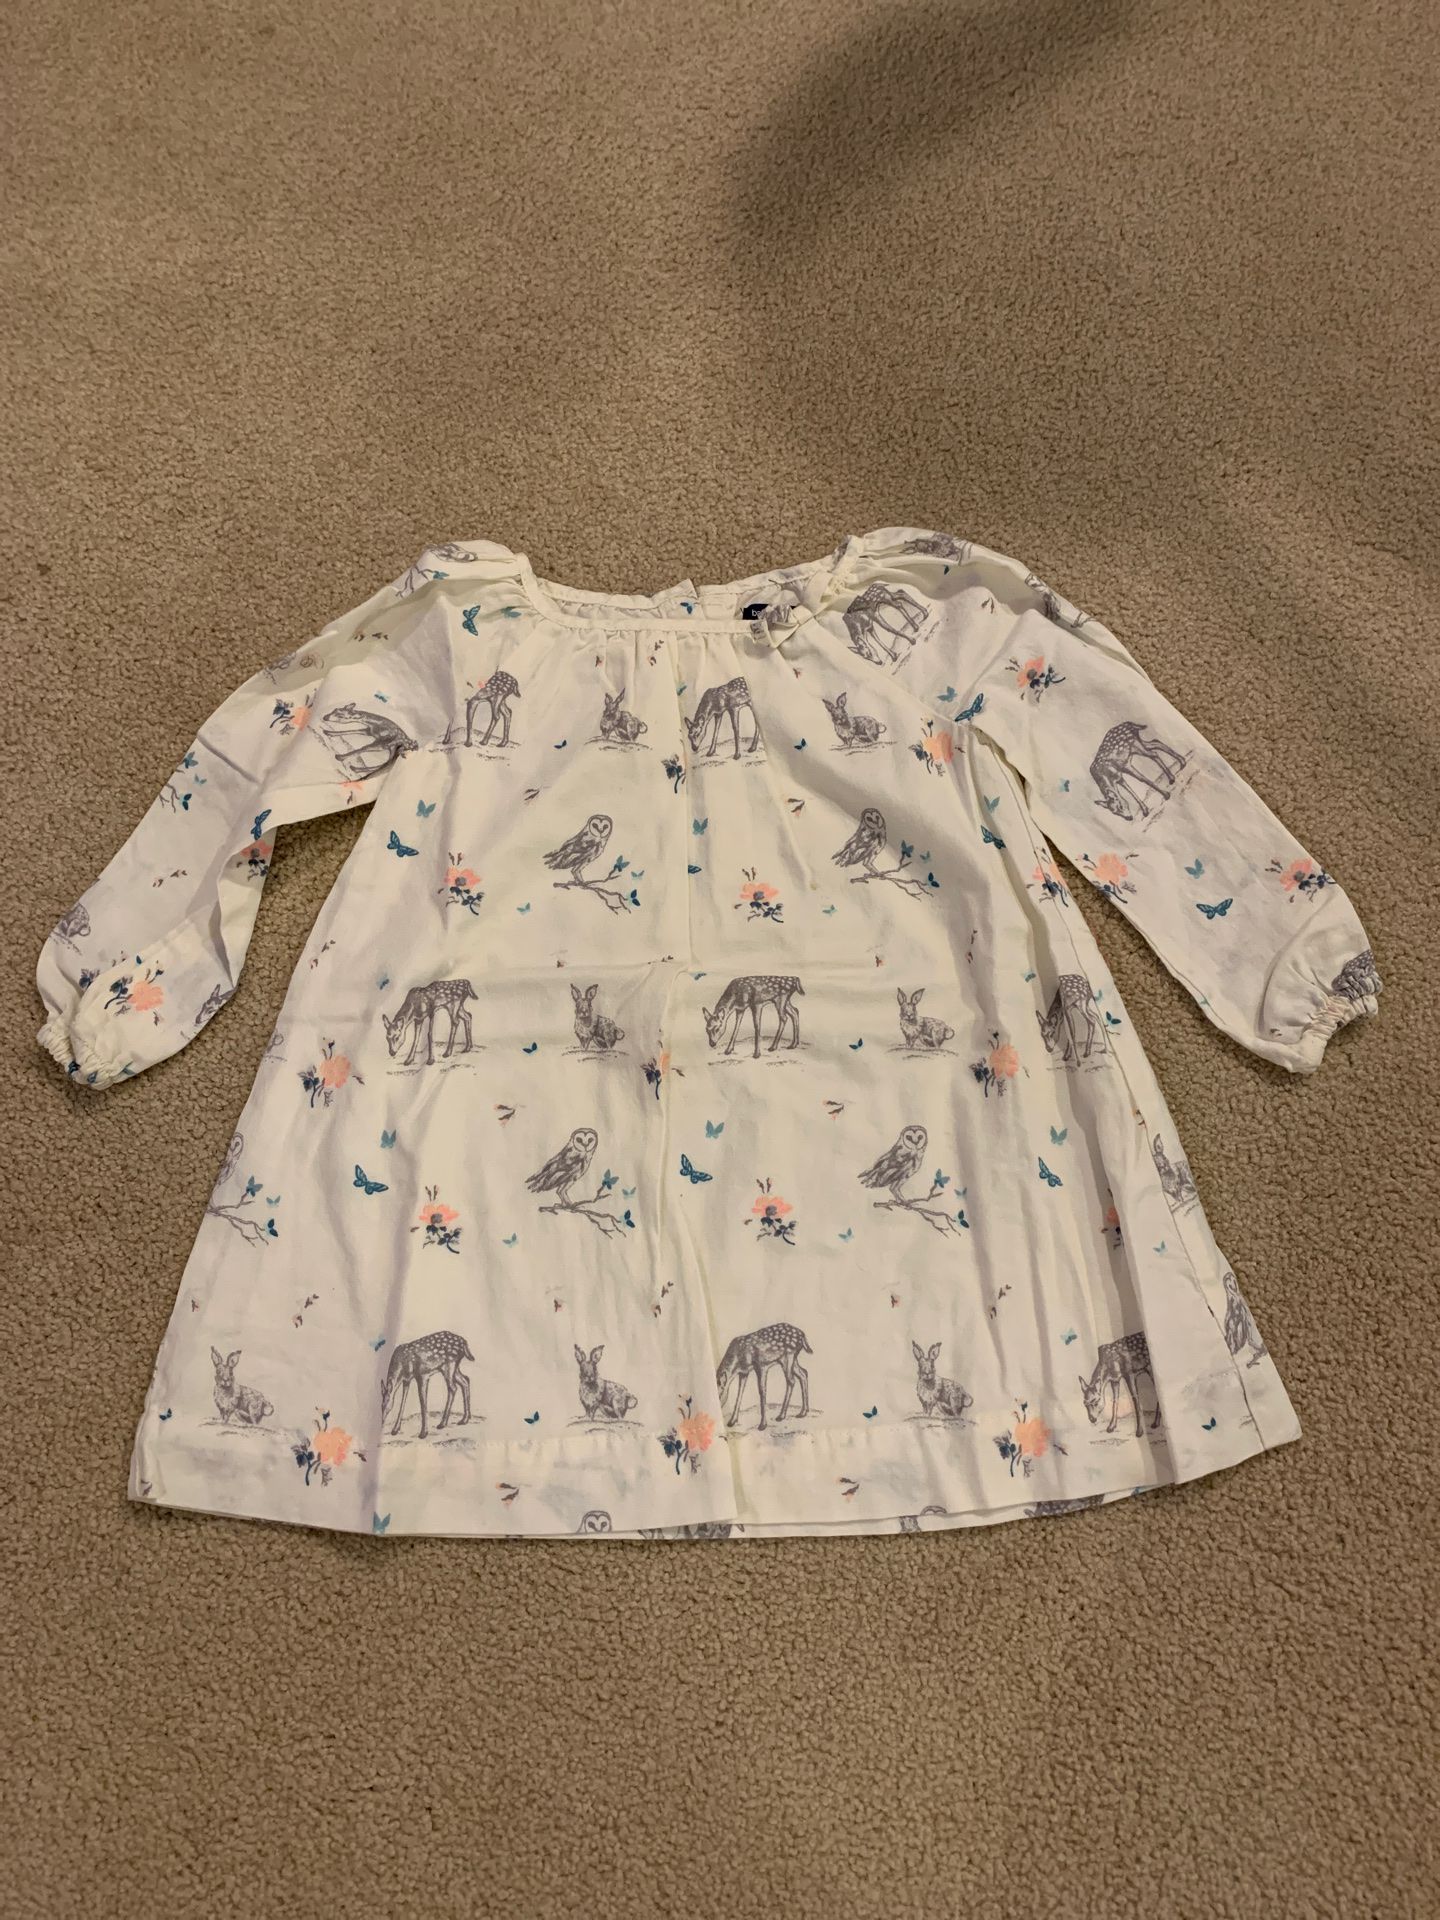 Baby Gap dress 18-24 months